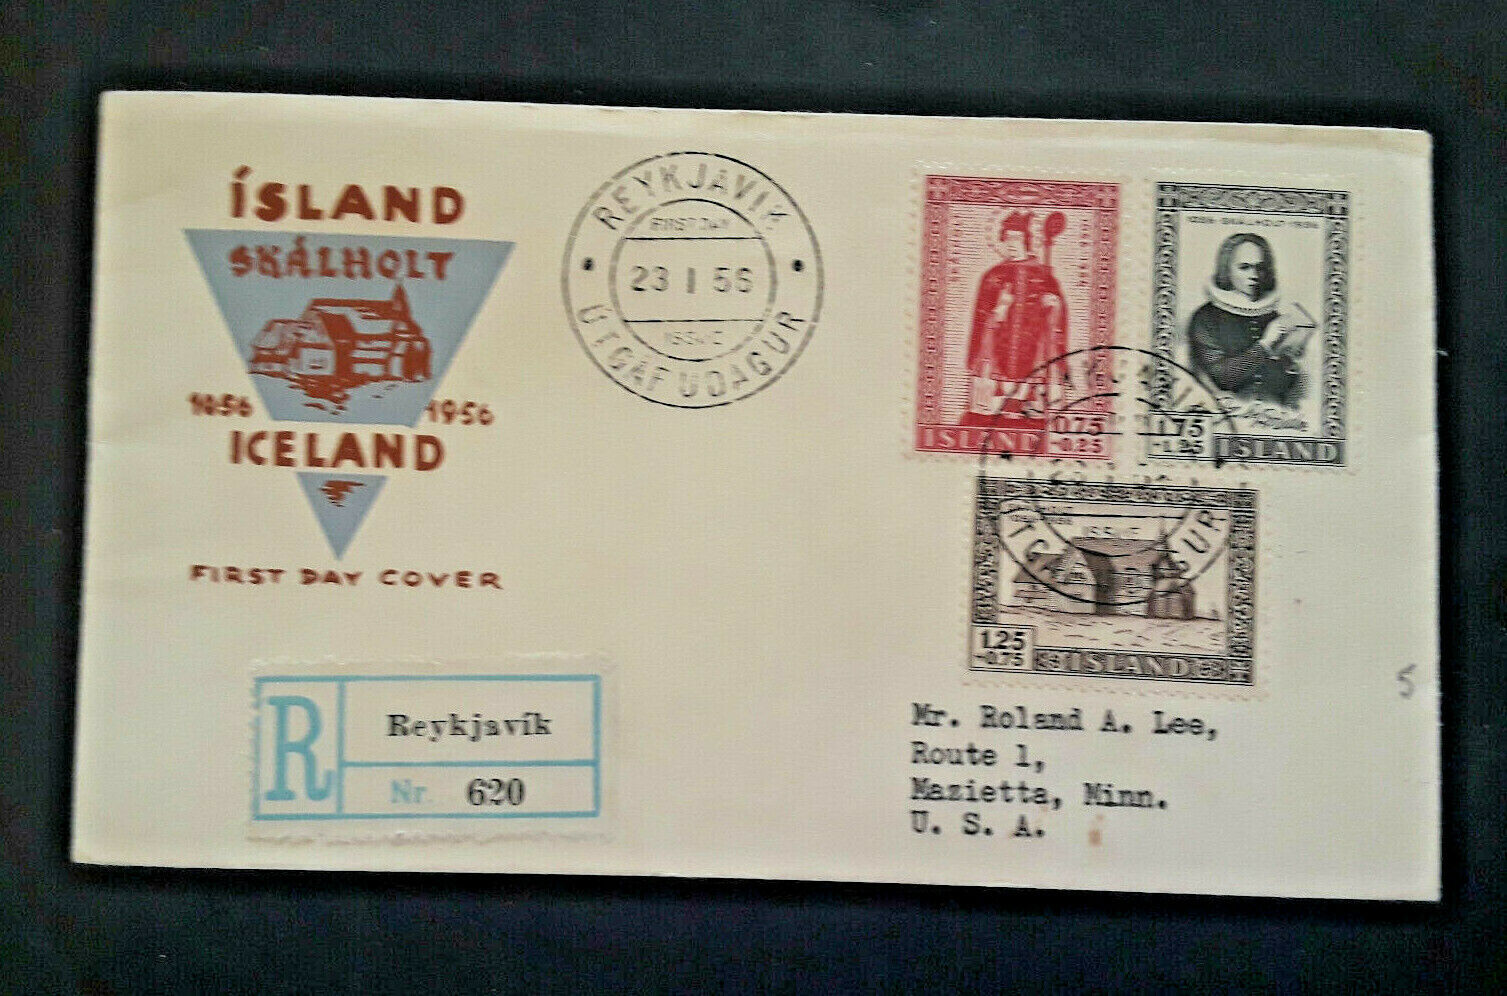 1956 Reykjavik Iceland To Mazietta Minnesota Registered First Day Cover